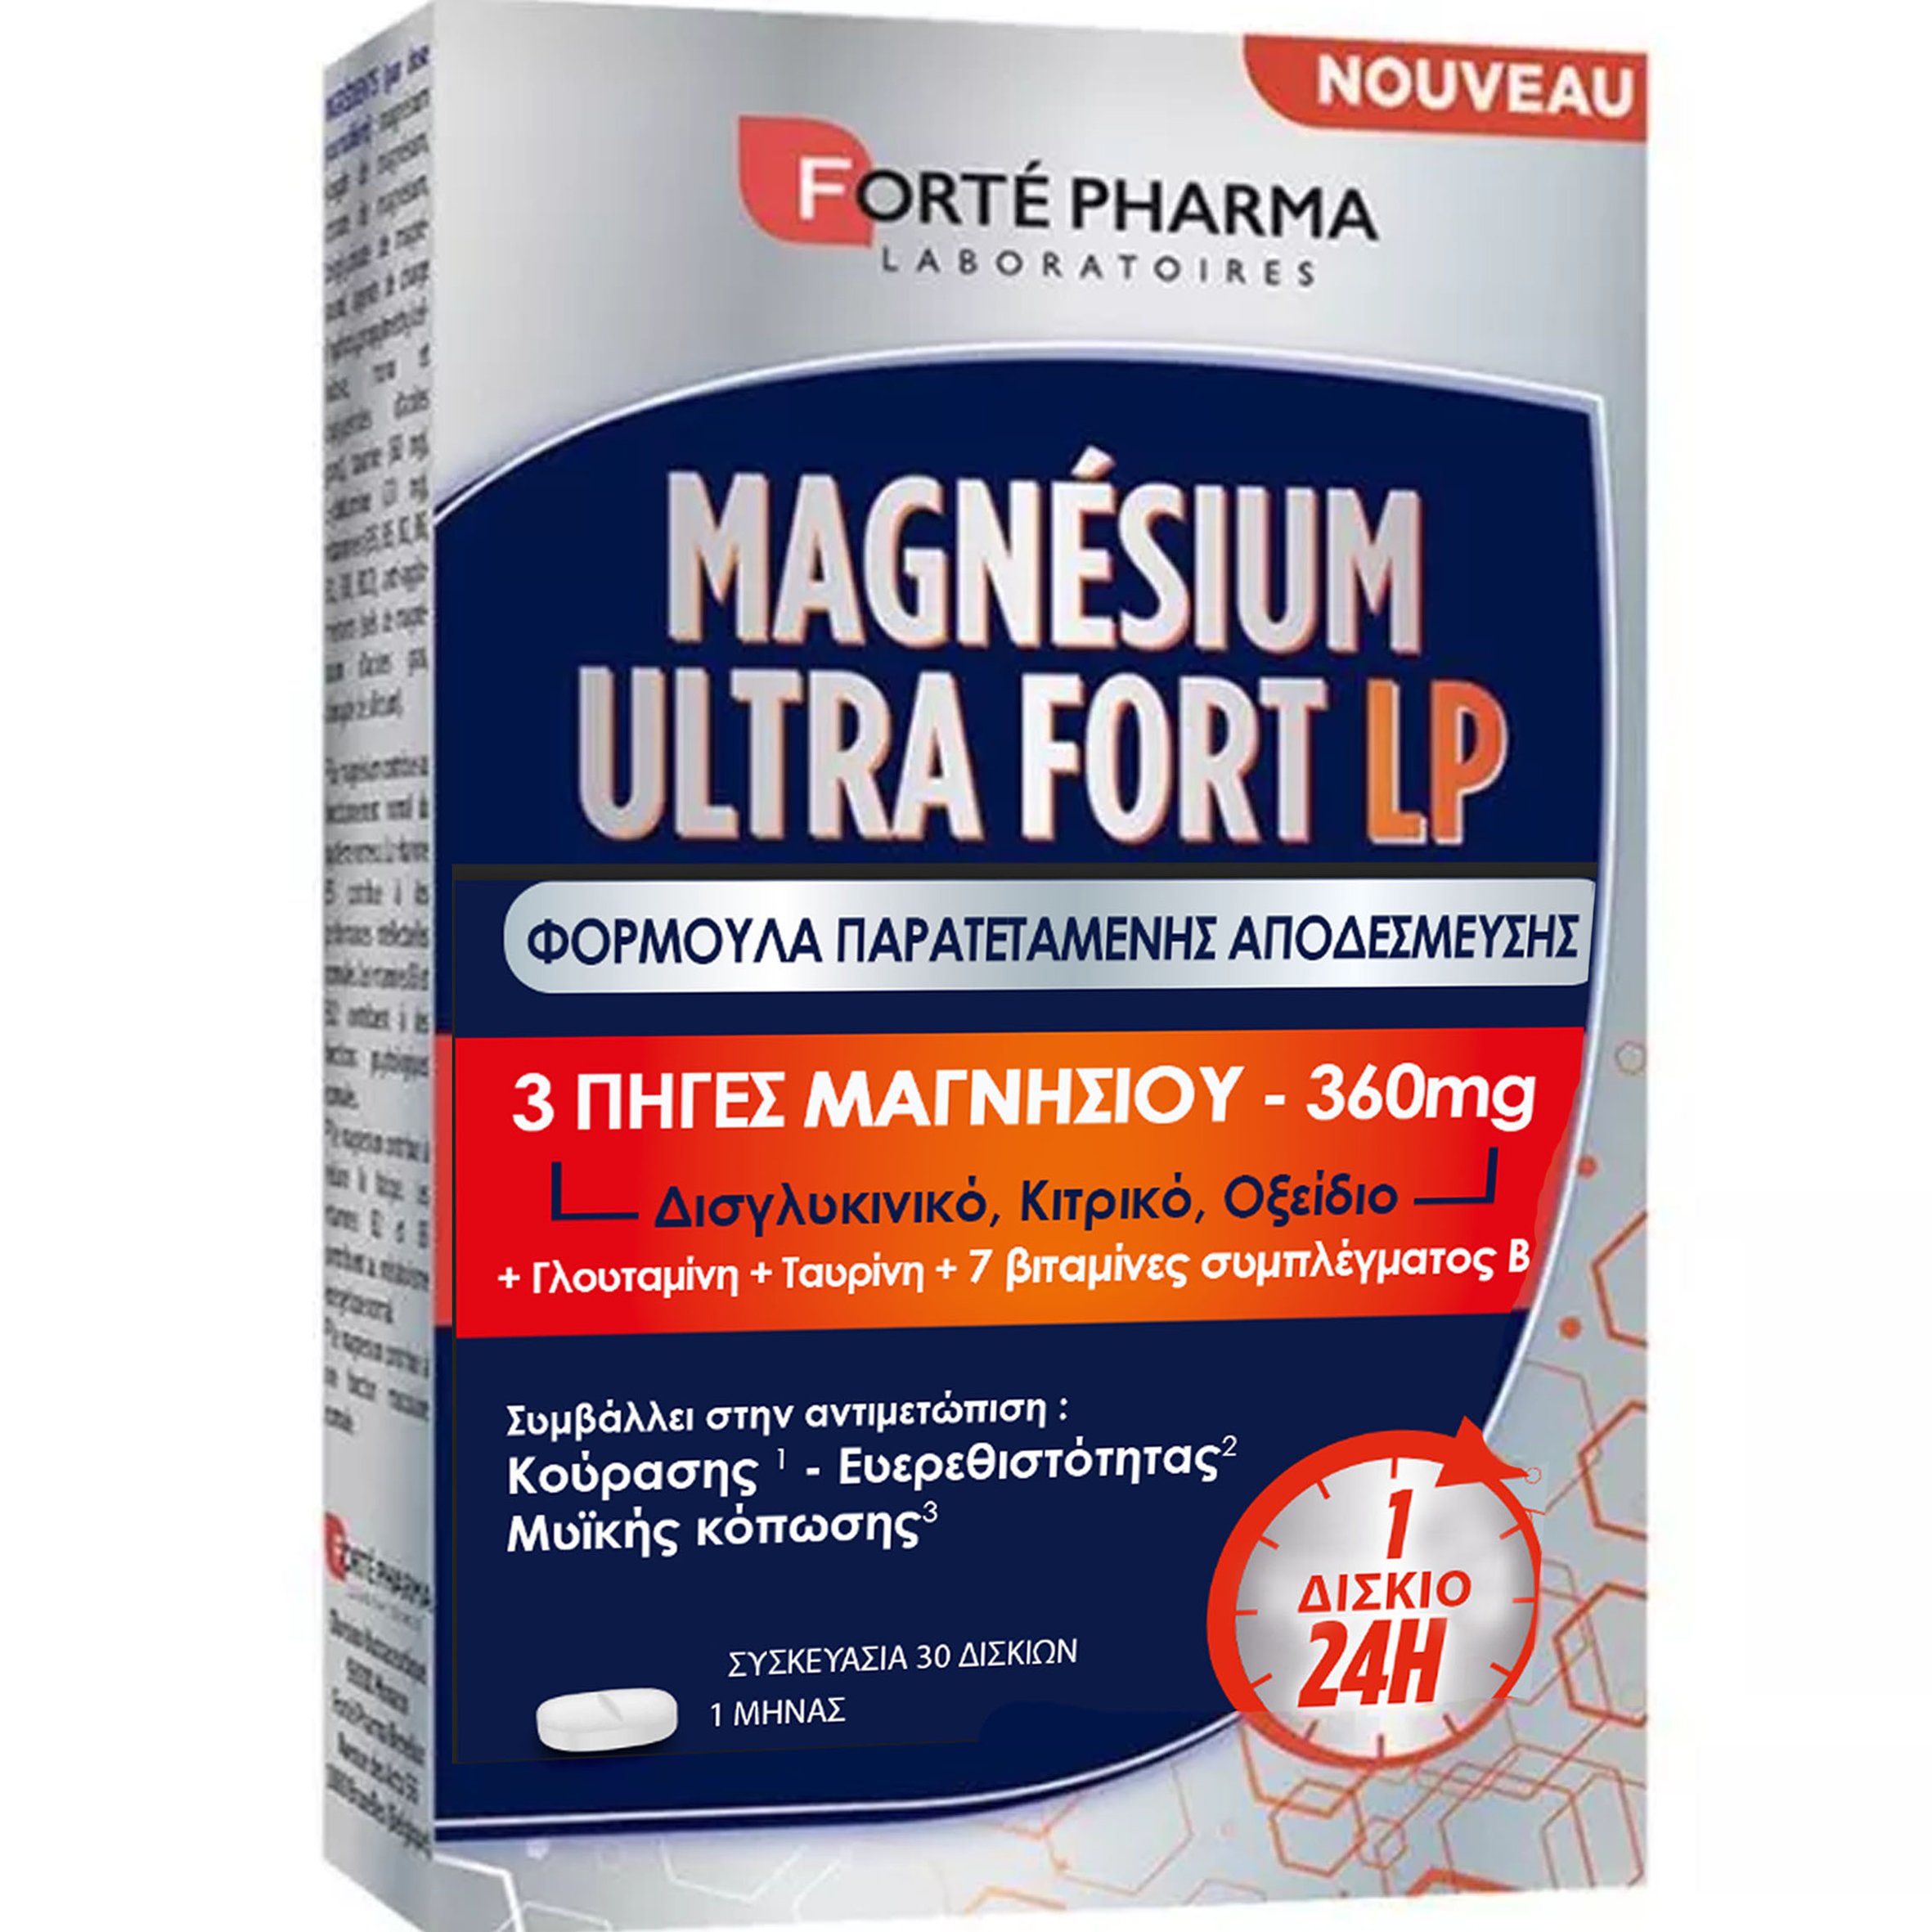 FORTE PHARMA Forte Pharma Magnesium Ultra Fort LP Συμπλήρωμα Διατροφής Μαγνησίου & Βιταμινών Συμπλέγματος Β για την Καλή Λειτουργία του Νευρικού & Μυϊκού Συστήματος, Μείωση Κόπωσης & Ενέργεια 30tabs